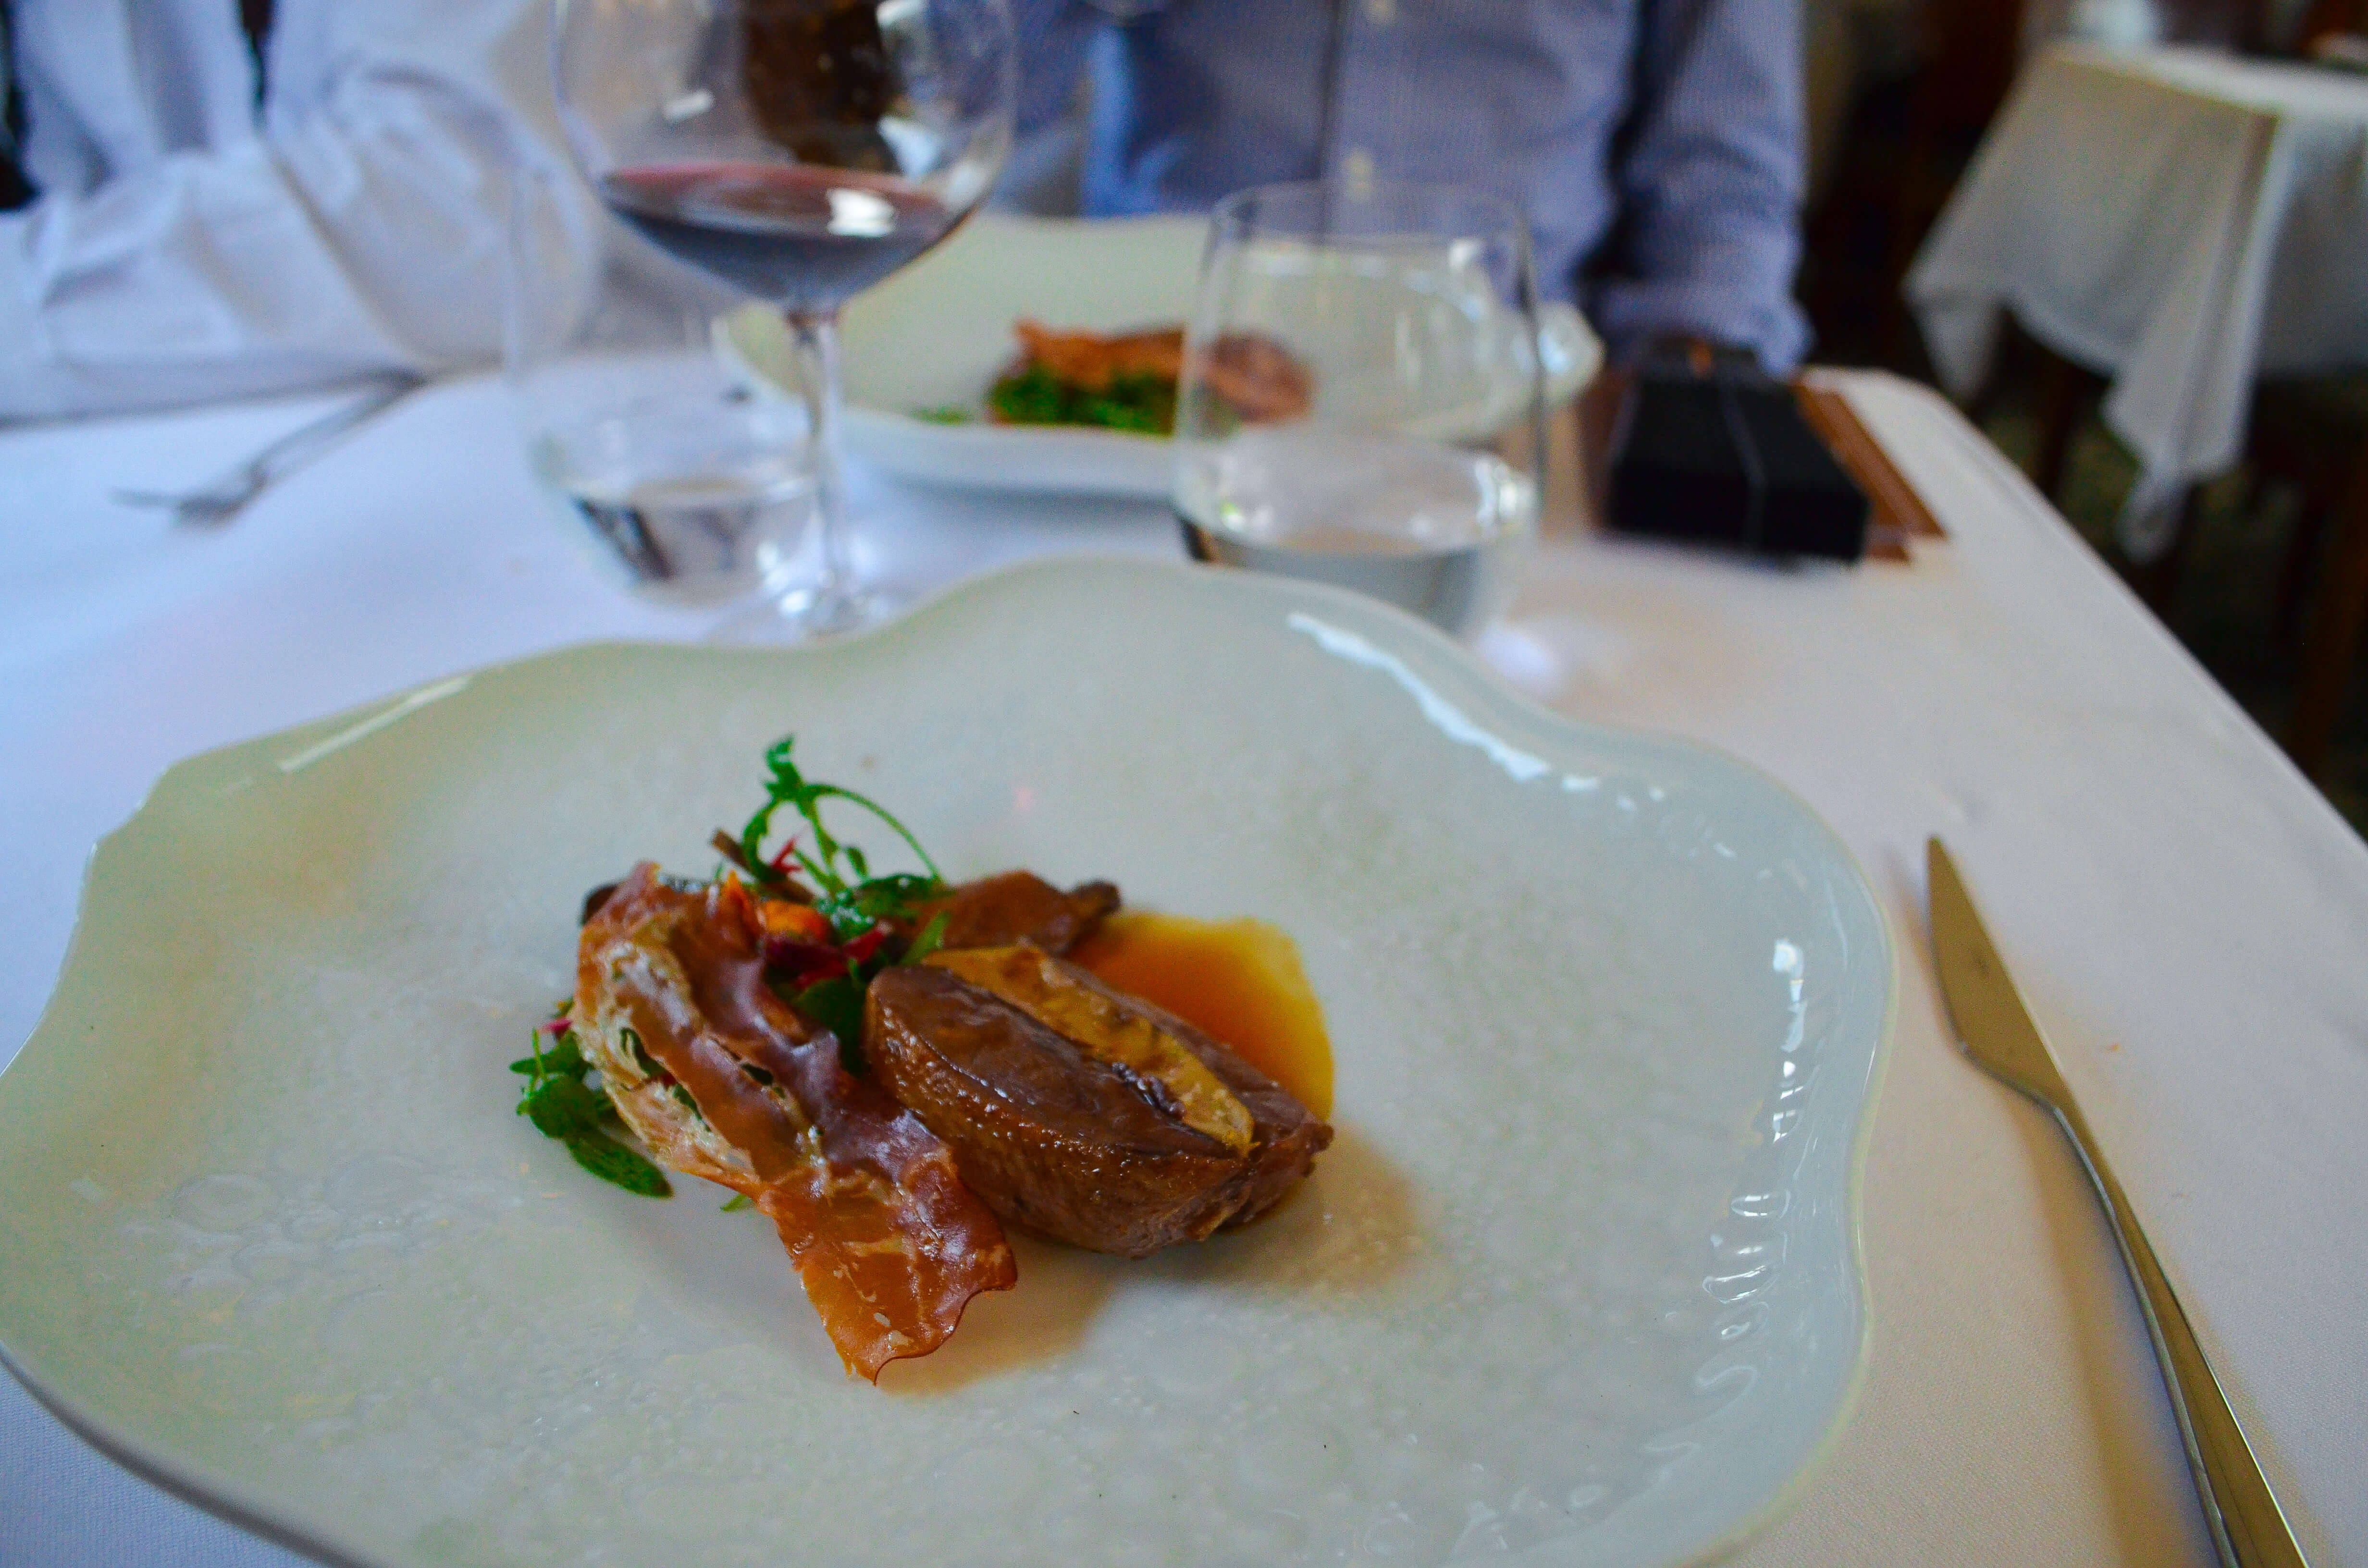 Foie gras stuffed pigeon breast, The Presidential gourmet food train, Porto, Portugal